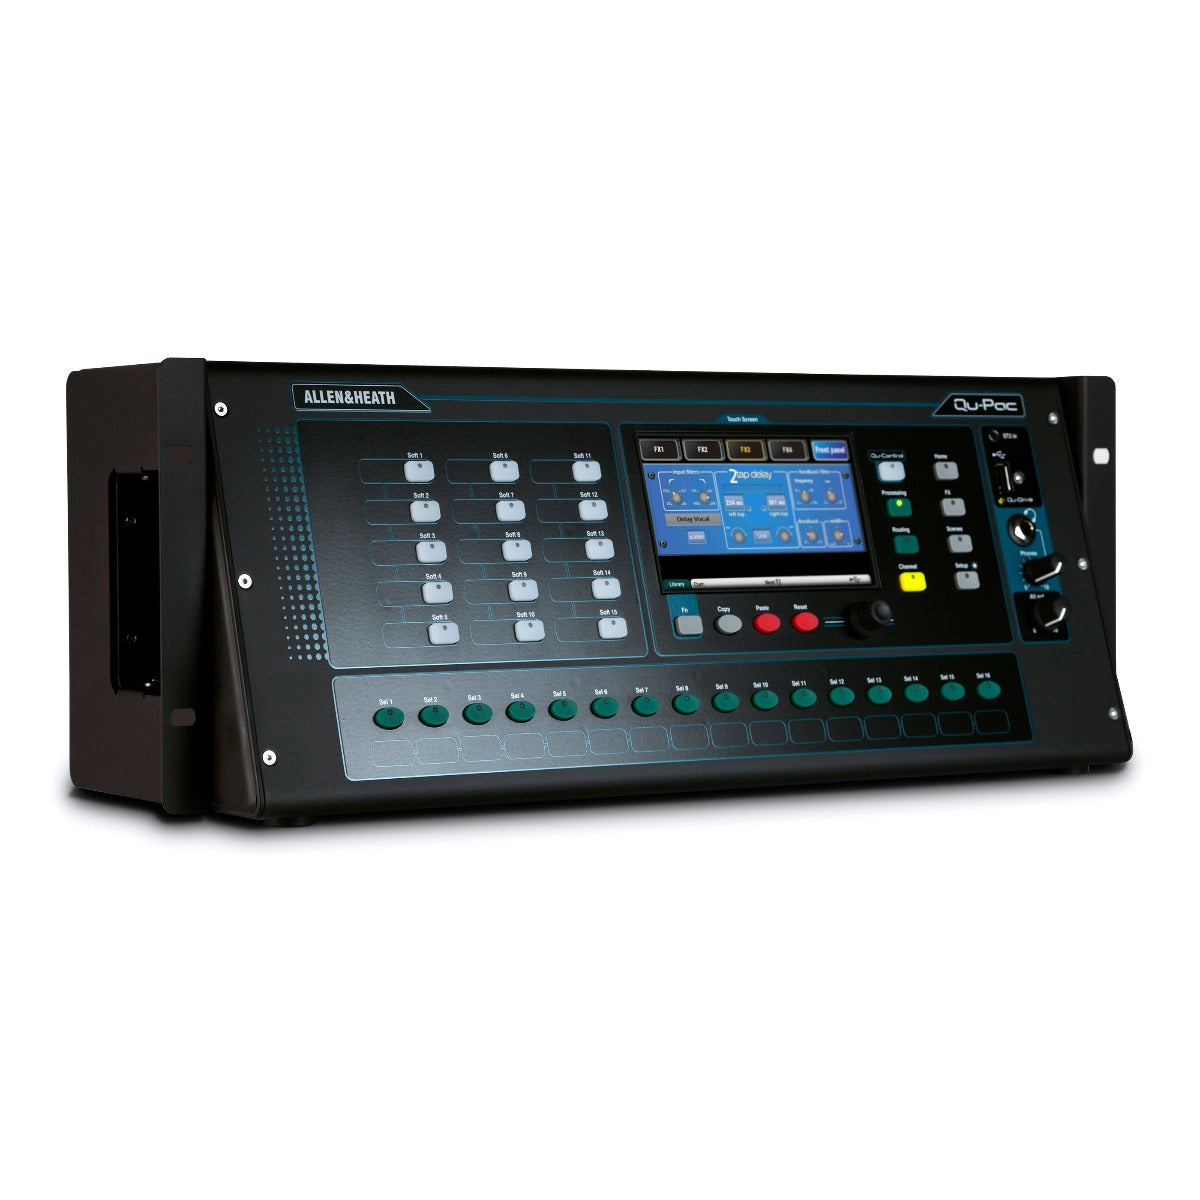 Allen & Heath Qu-PAC Digital Mixer 